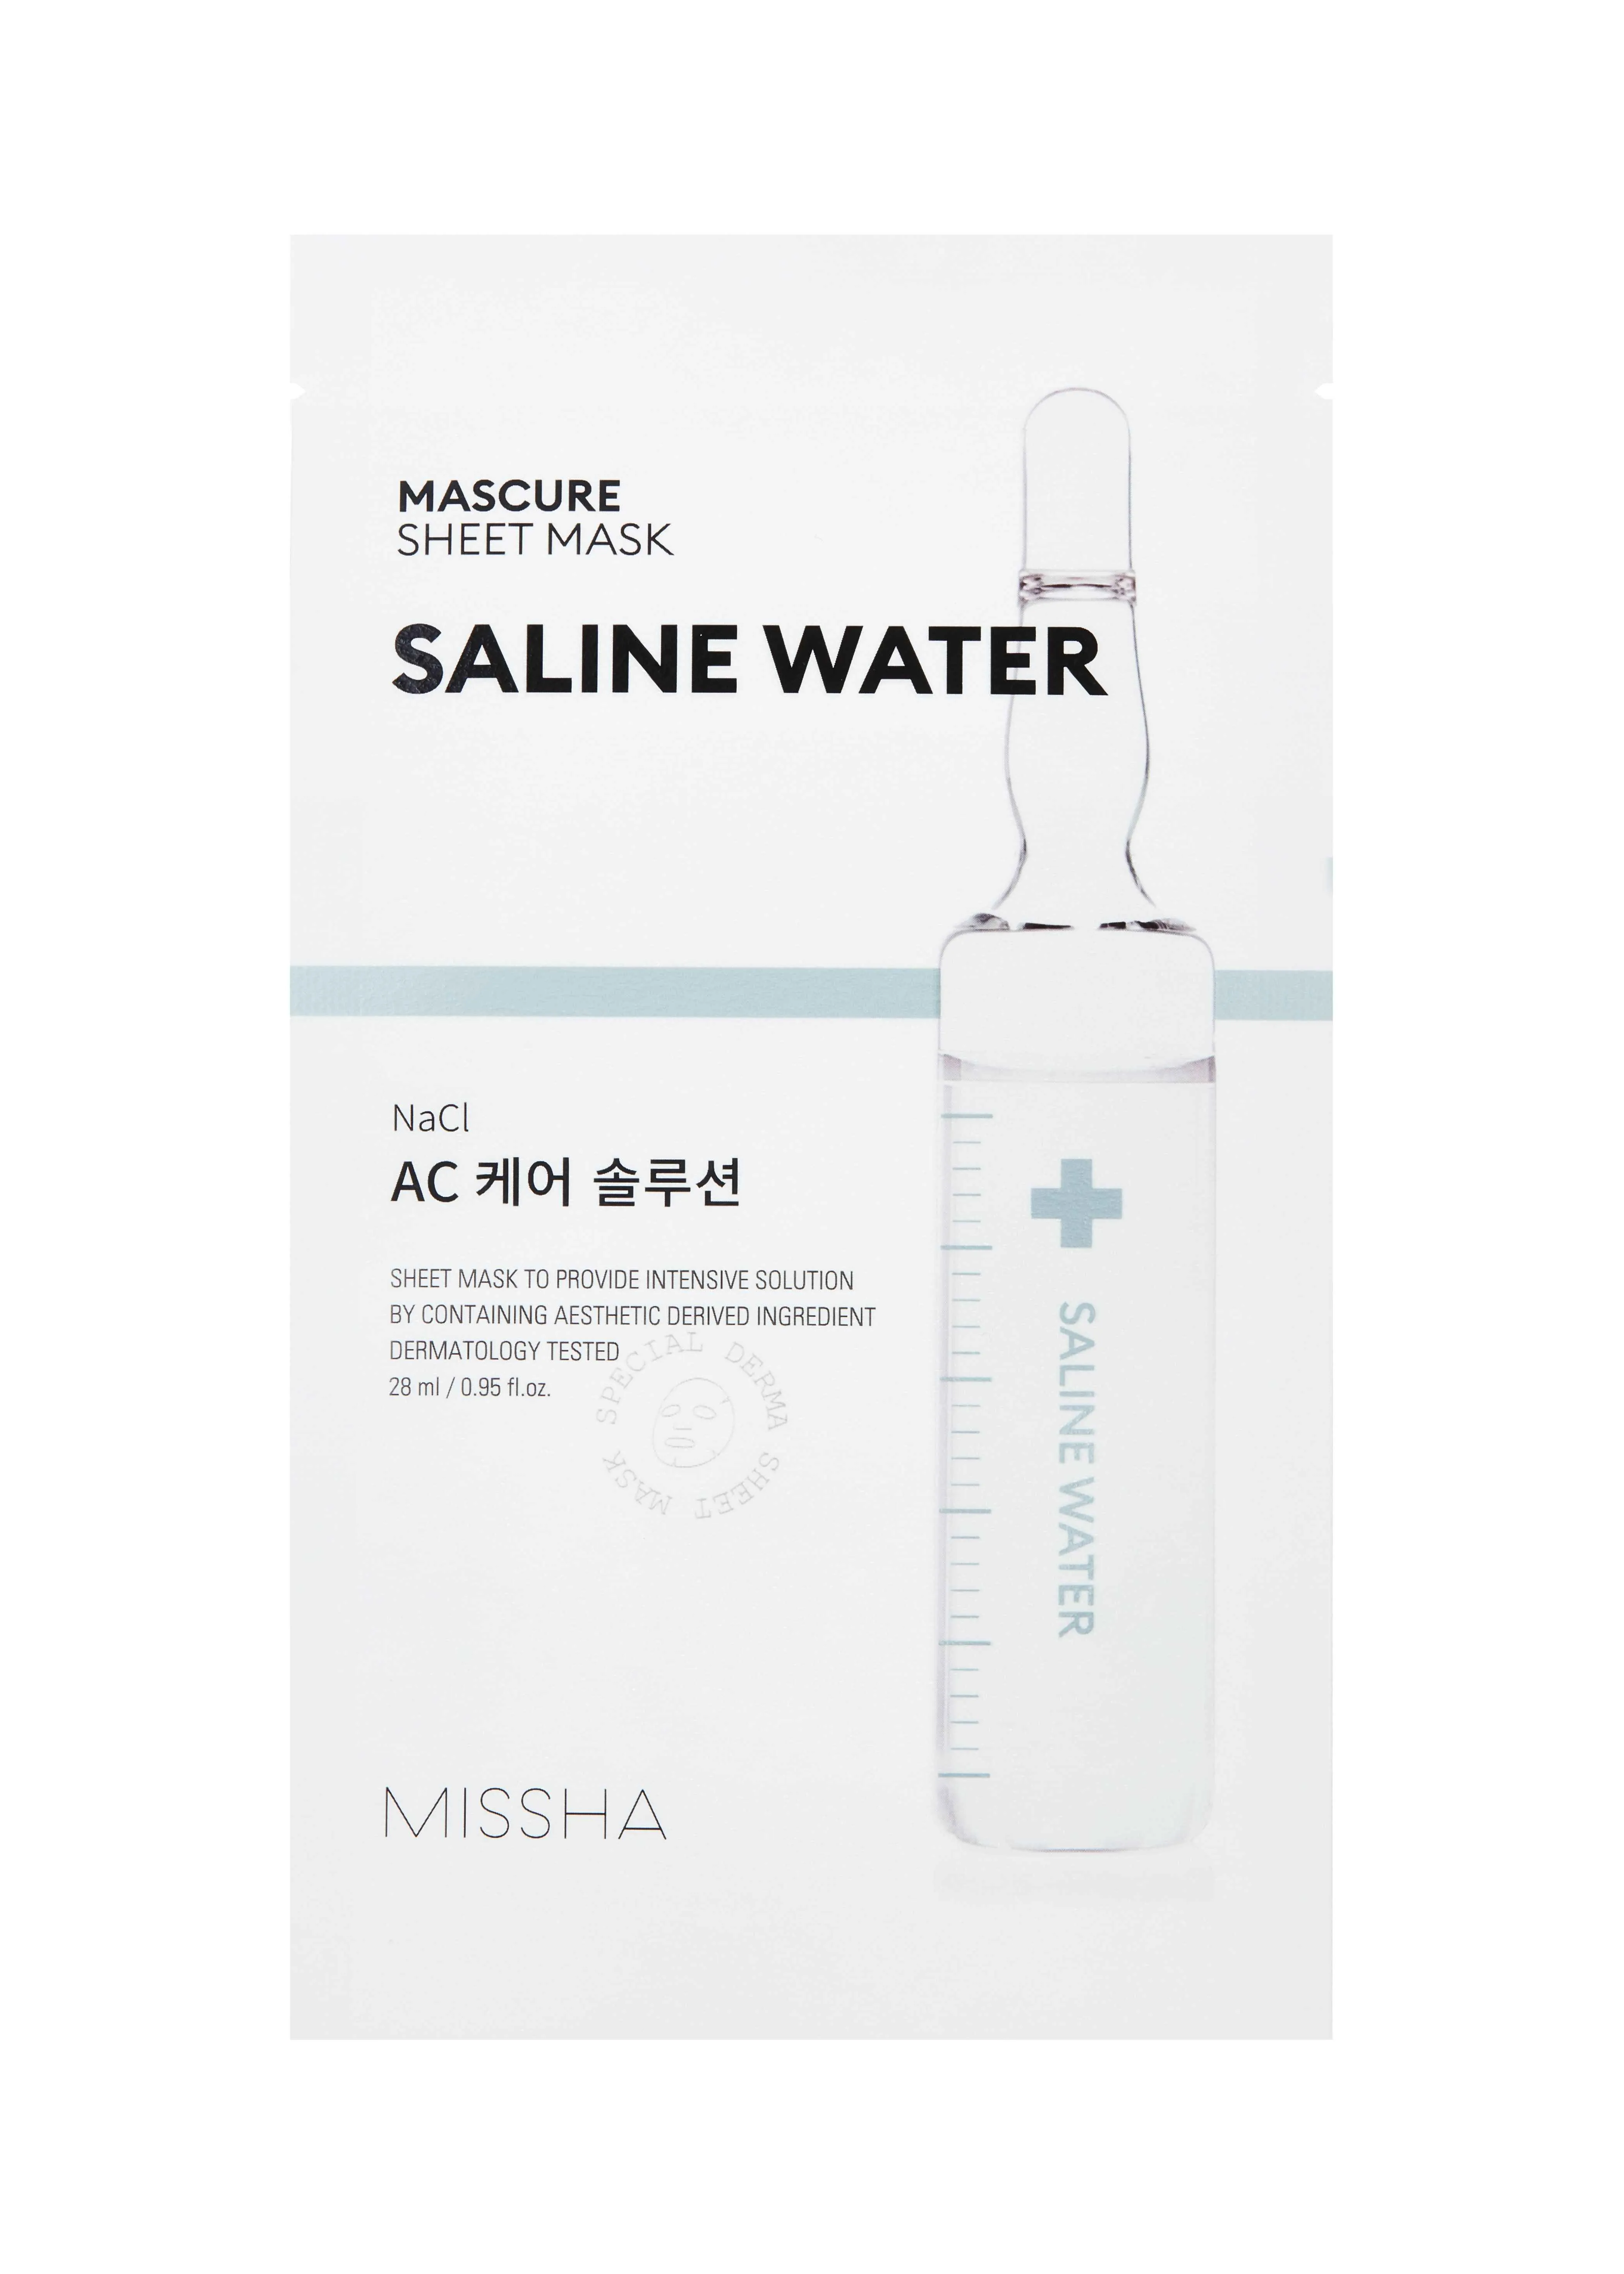 Missha Mascure AС Care Solution Sheet Mask Saline Water 27 ml / 1 sheet